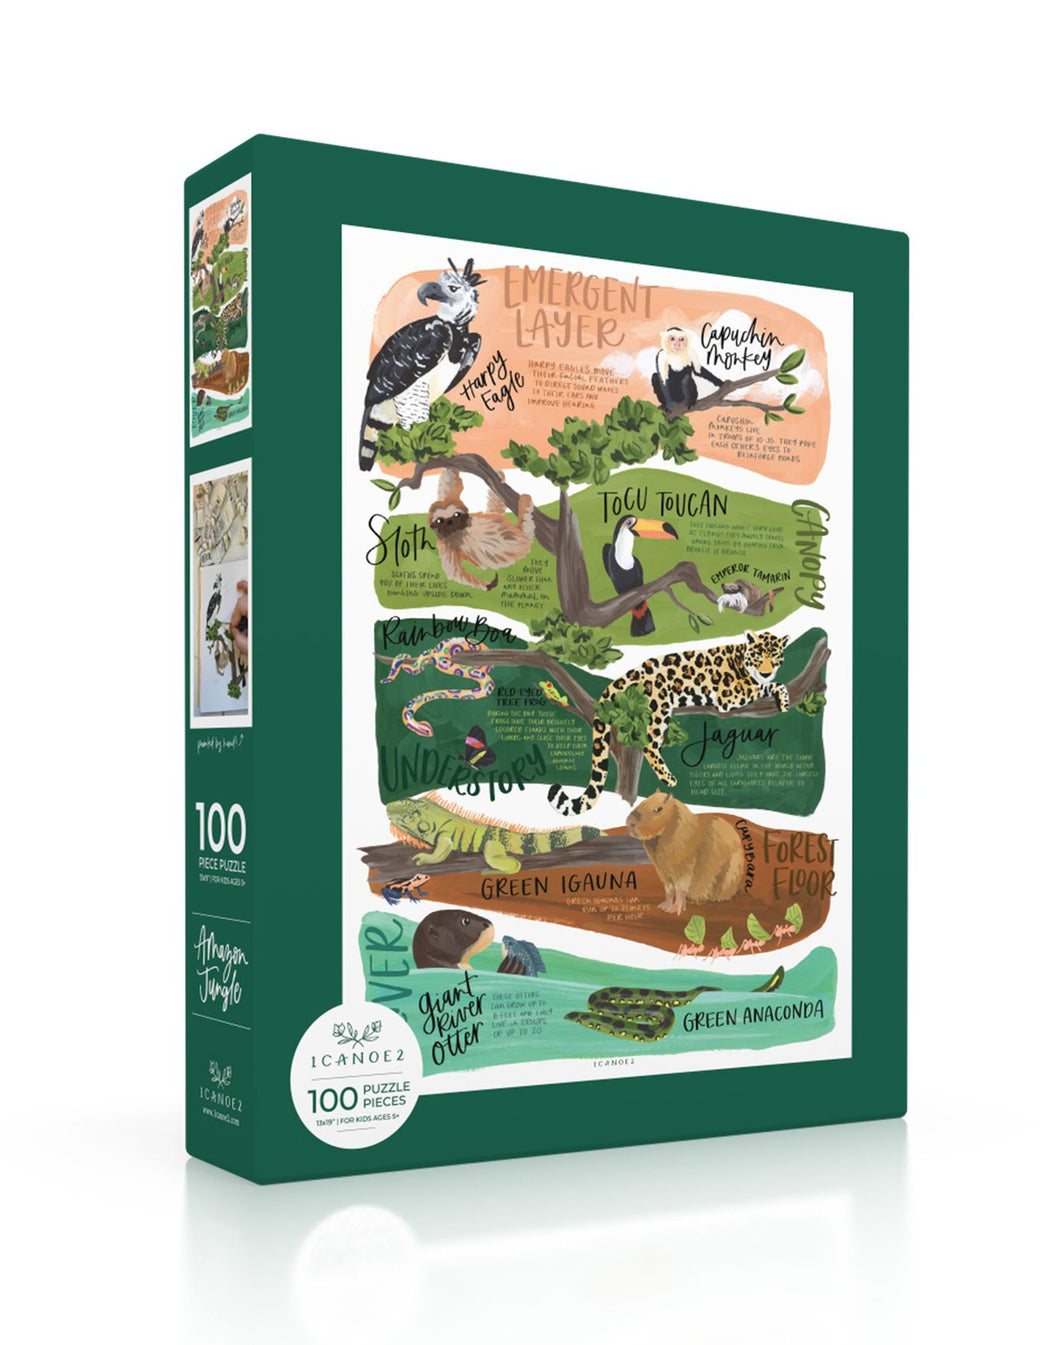 1Canoe2 Amazon Jungle 100 Piece Education Kids Jigsaw Puzzle